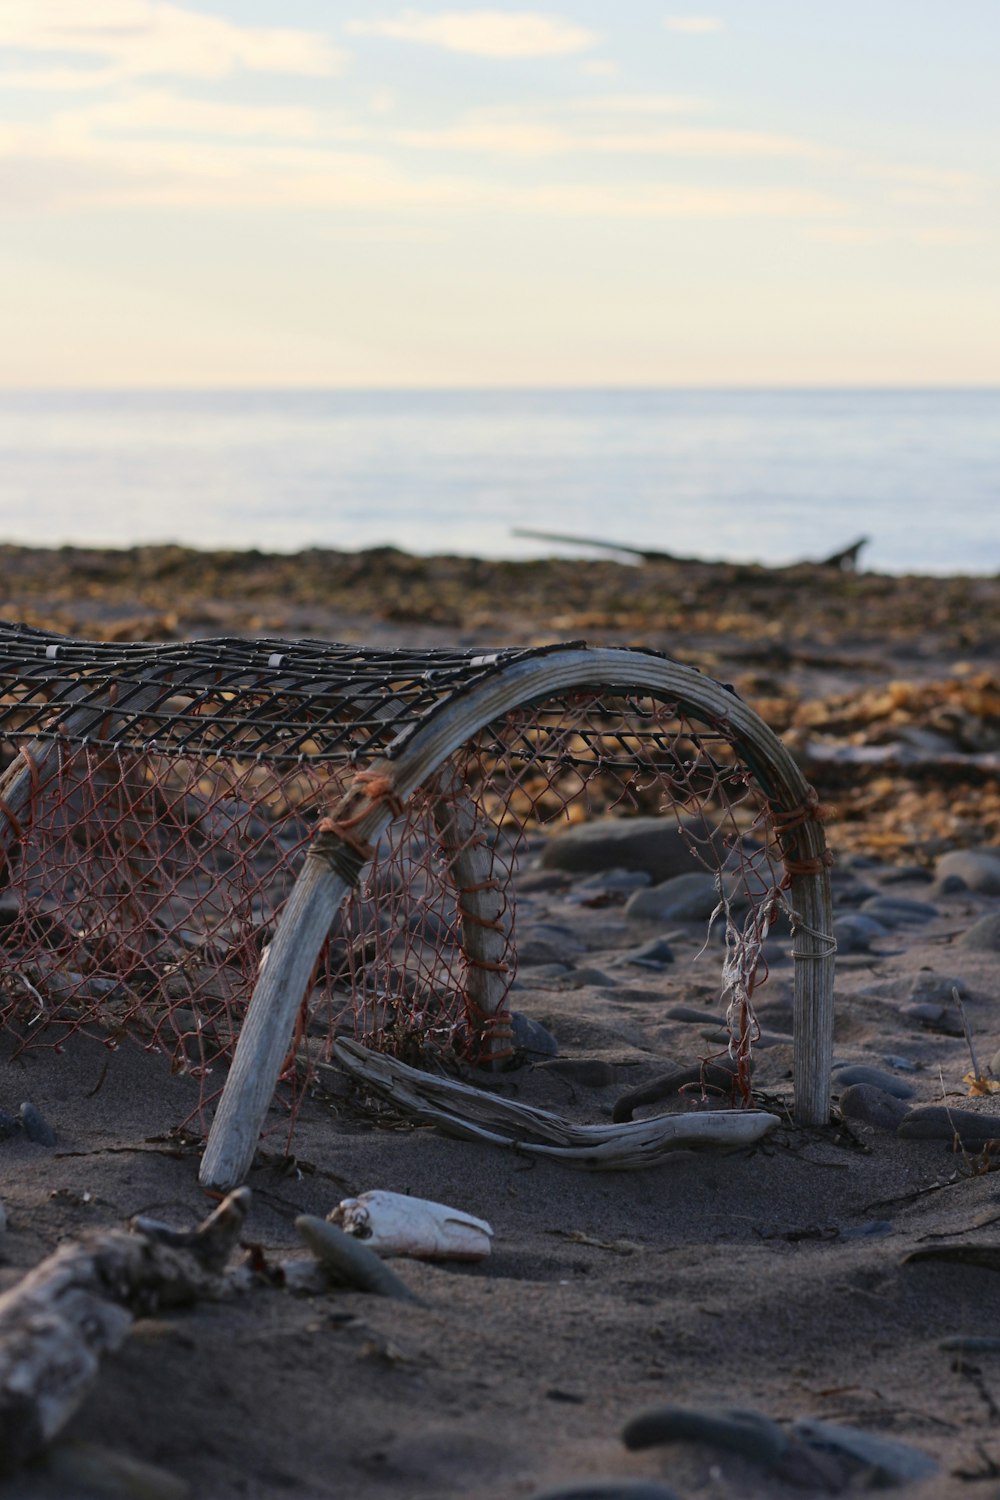 an old fishing net on the beach near the ocean